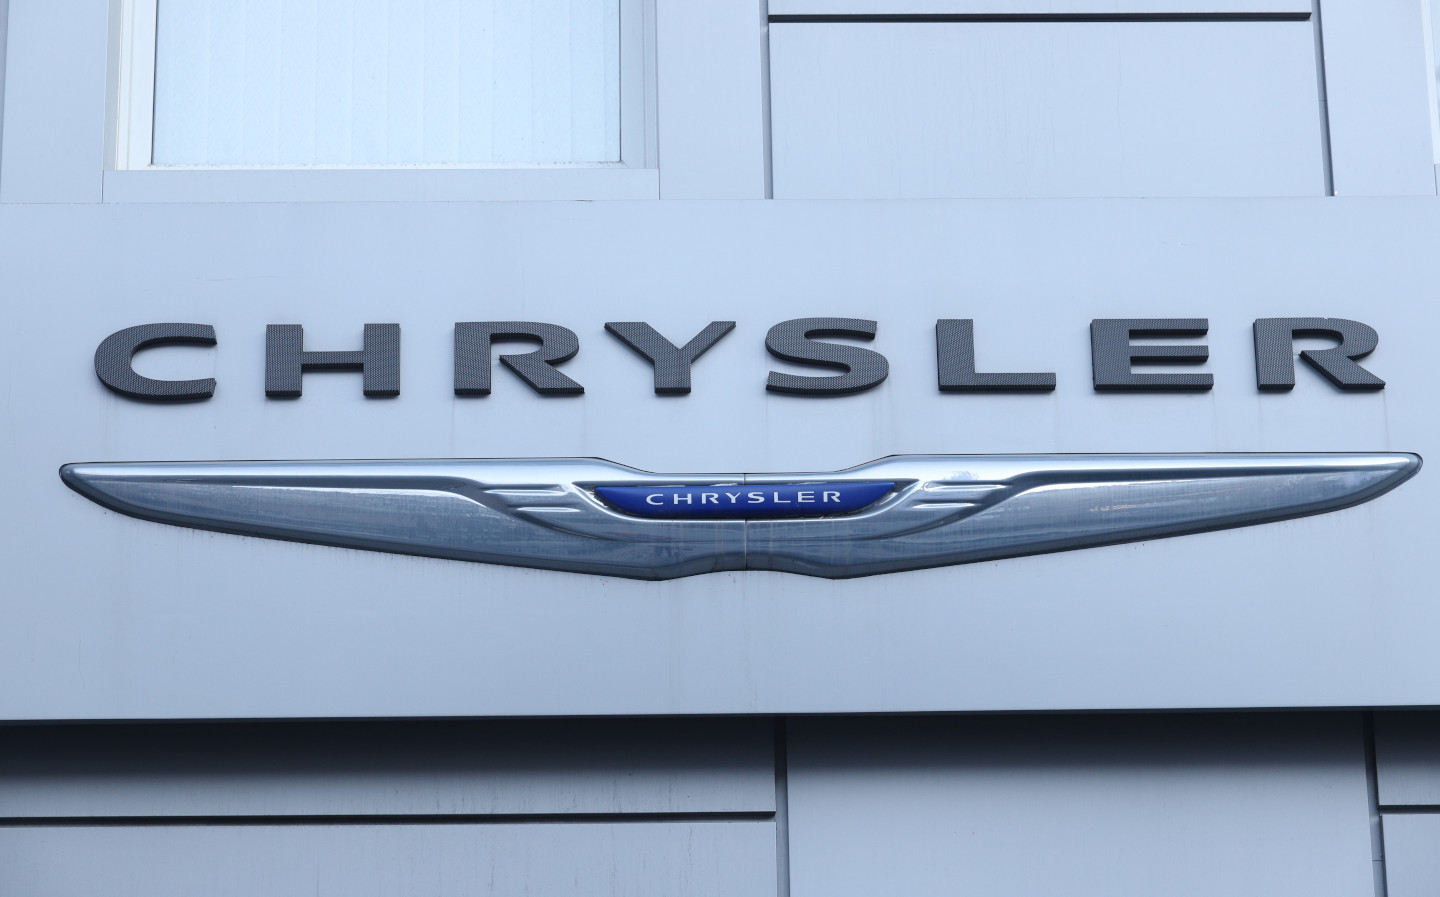 Merger of PSA and Fiat Chrysler could spell end for Chrysler car brand